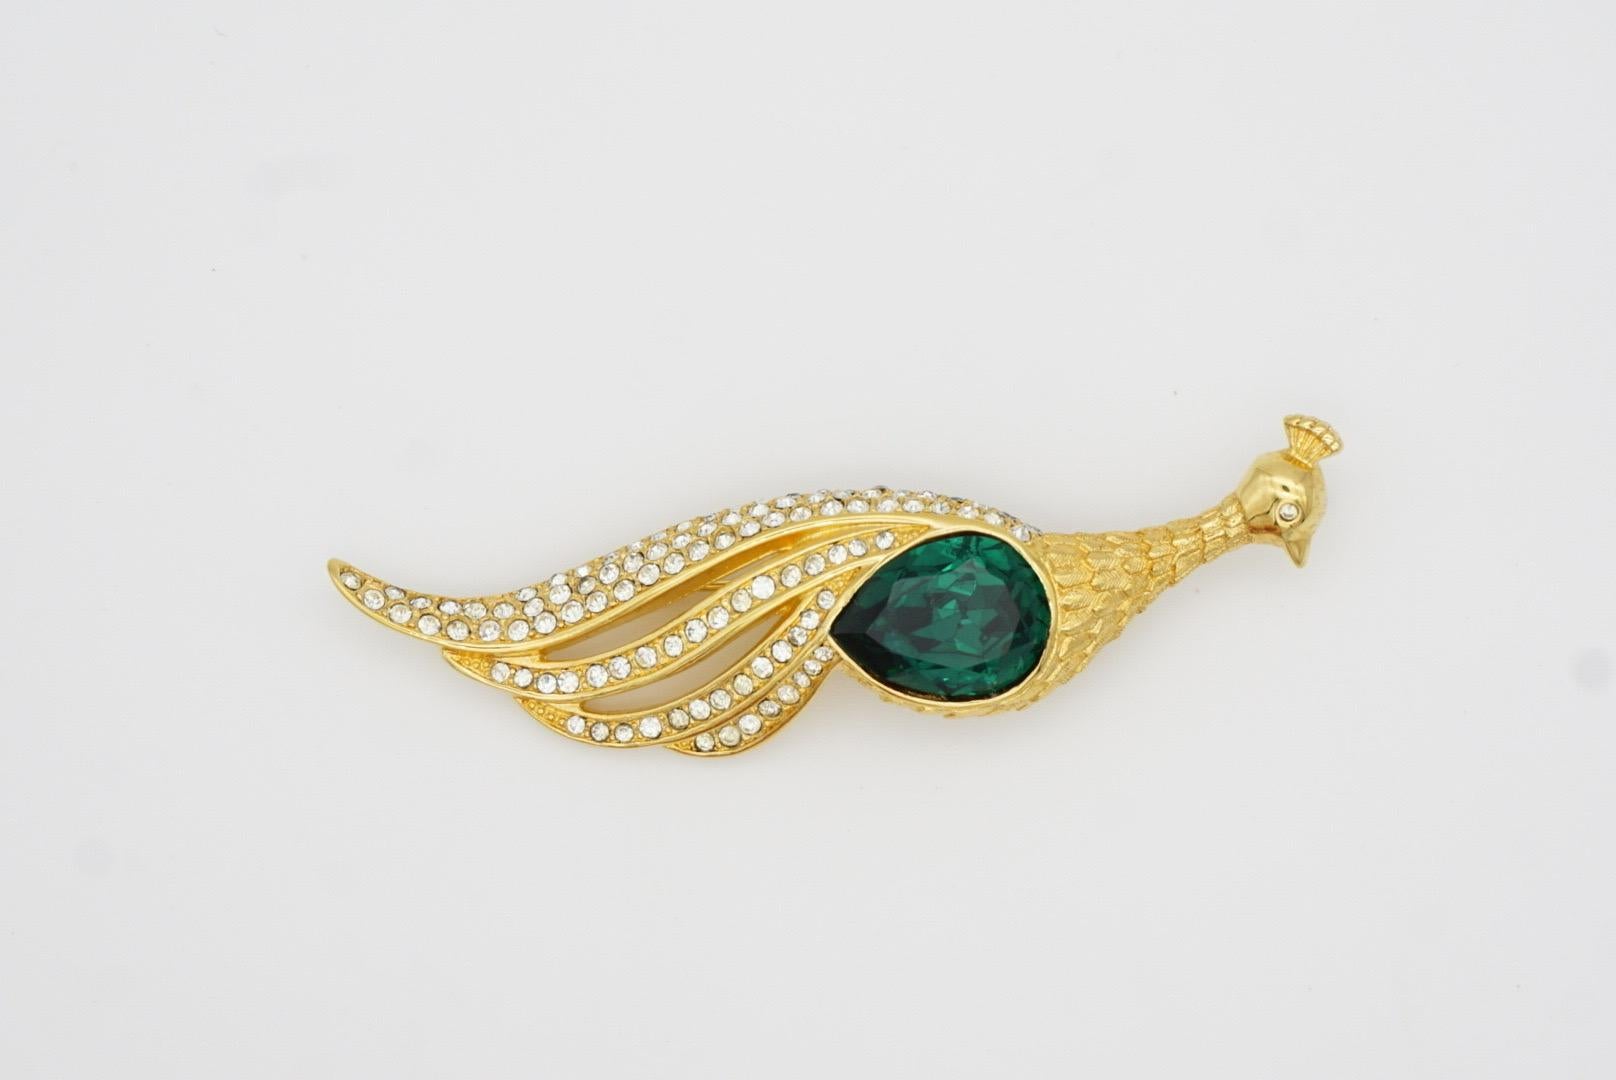 Christian Dior Vintage 1980s Long Vivid Peacock Emerald Crystal Openwork Brooch For Sale 5